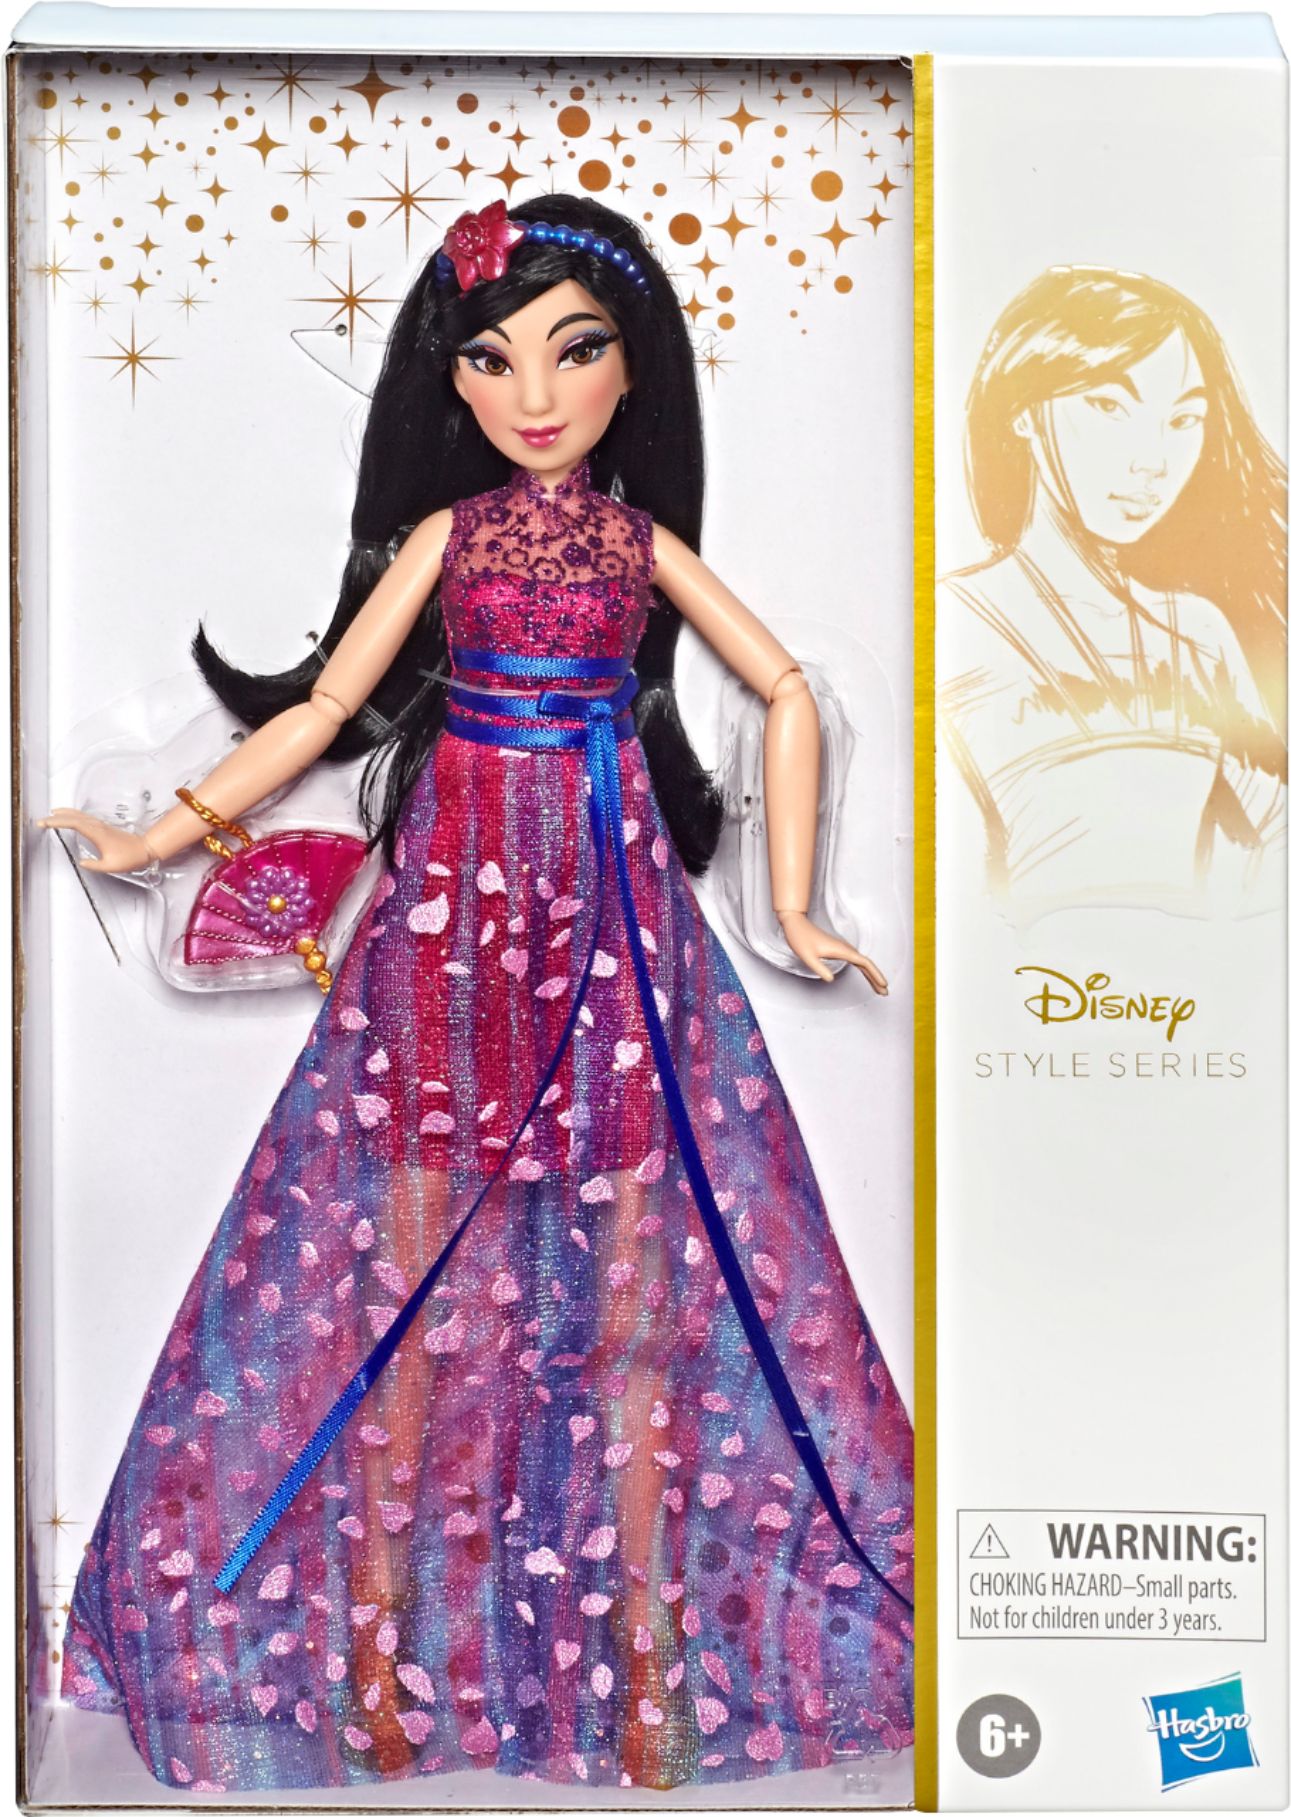 Best Buy: Disney Princess Style Series Ariel Doll Styles May Vary